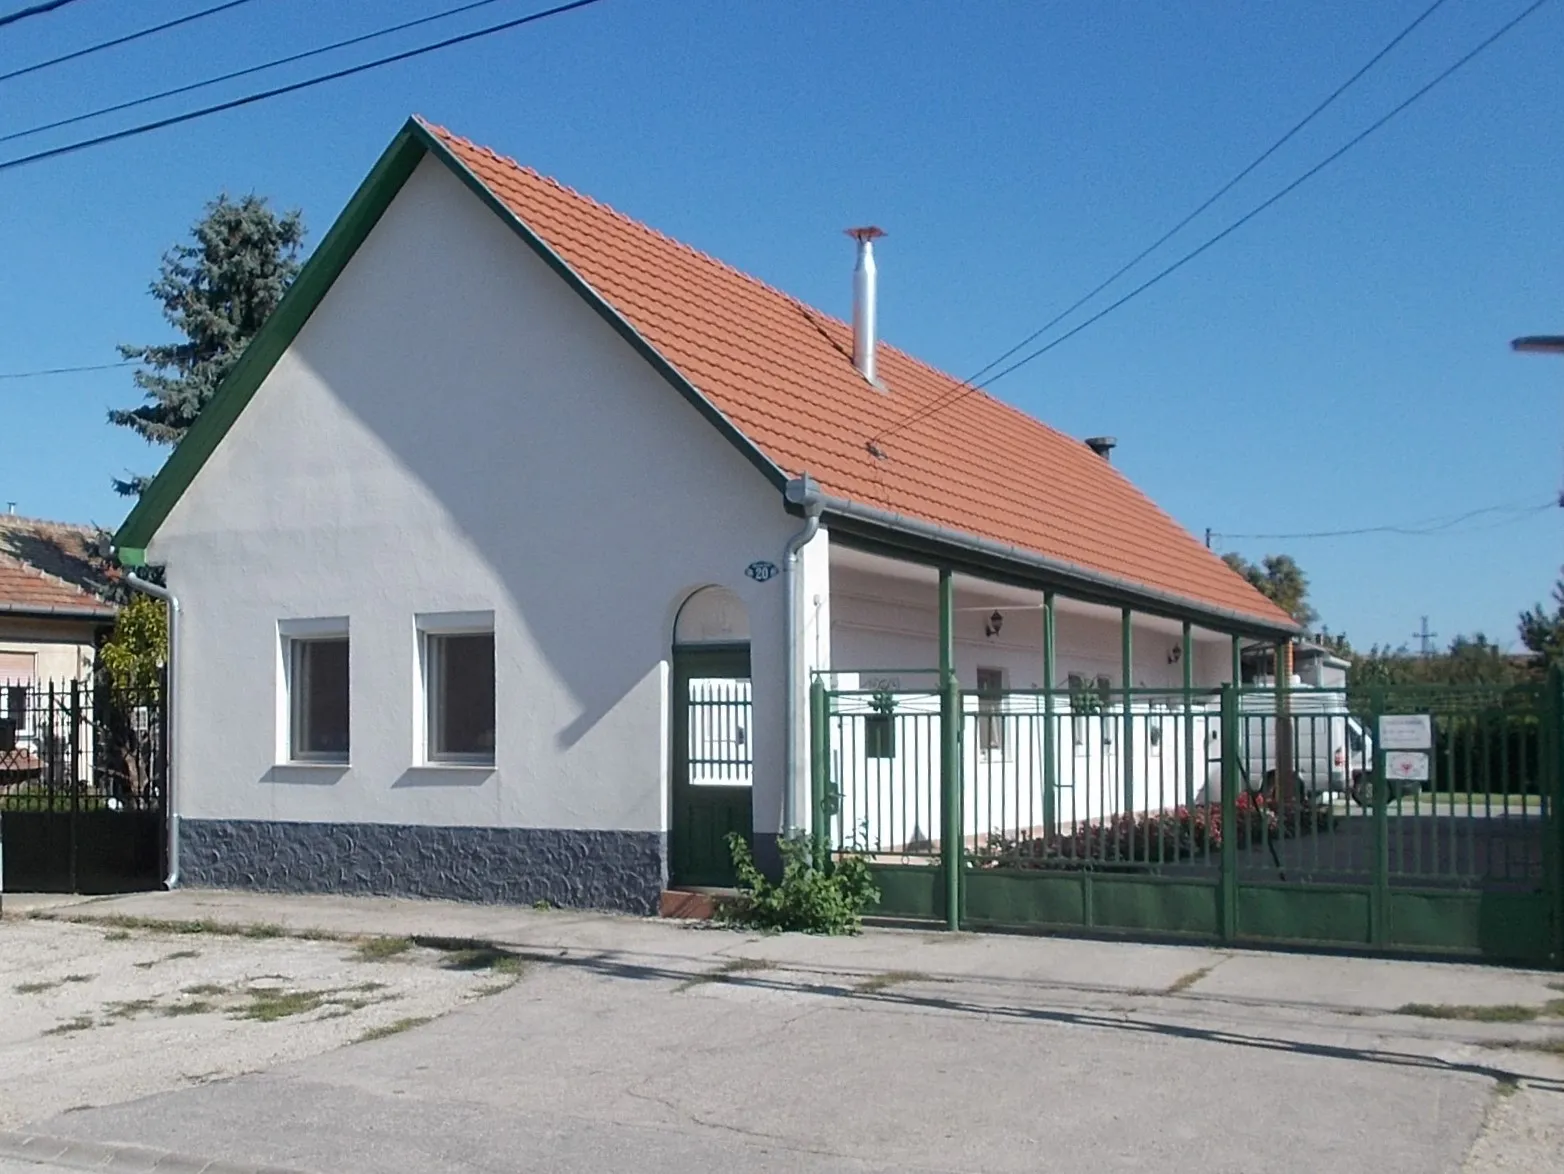 Photo showing: : House with long porched house - 20 Zöldfa utca, Alsóváros neighborhood, Dunaharaszti, Pest County, Hungary.